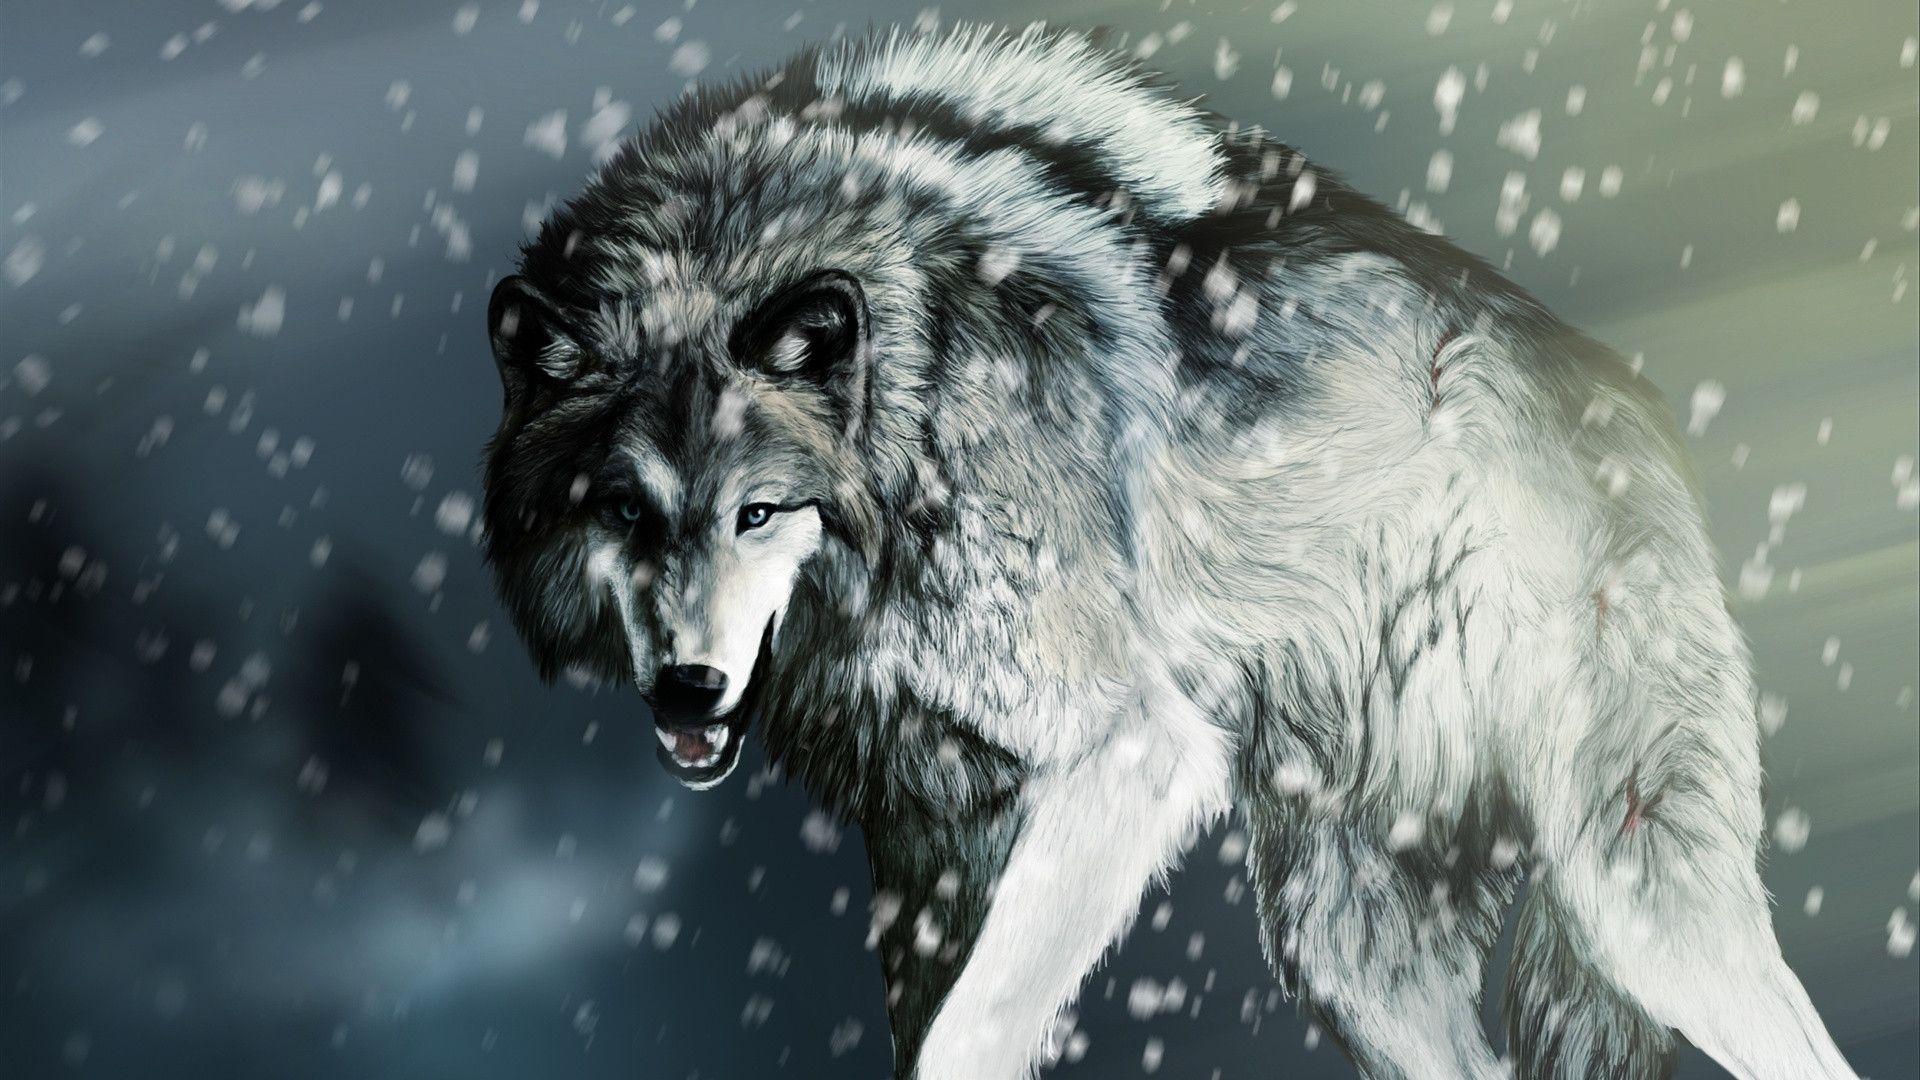 Wolf Wallpaper, HD Quality Wolf Image, Wolf Wallpaper Full HD